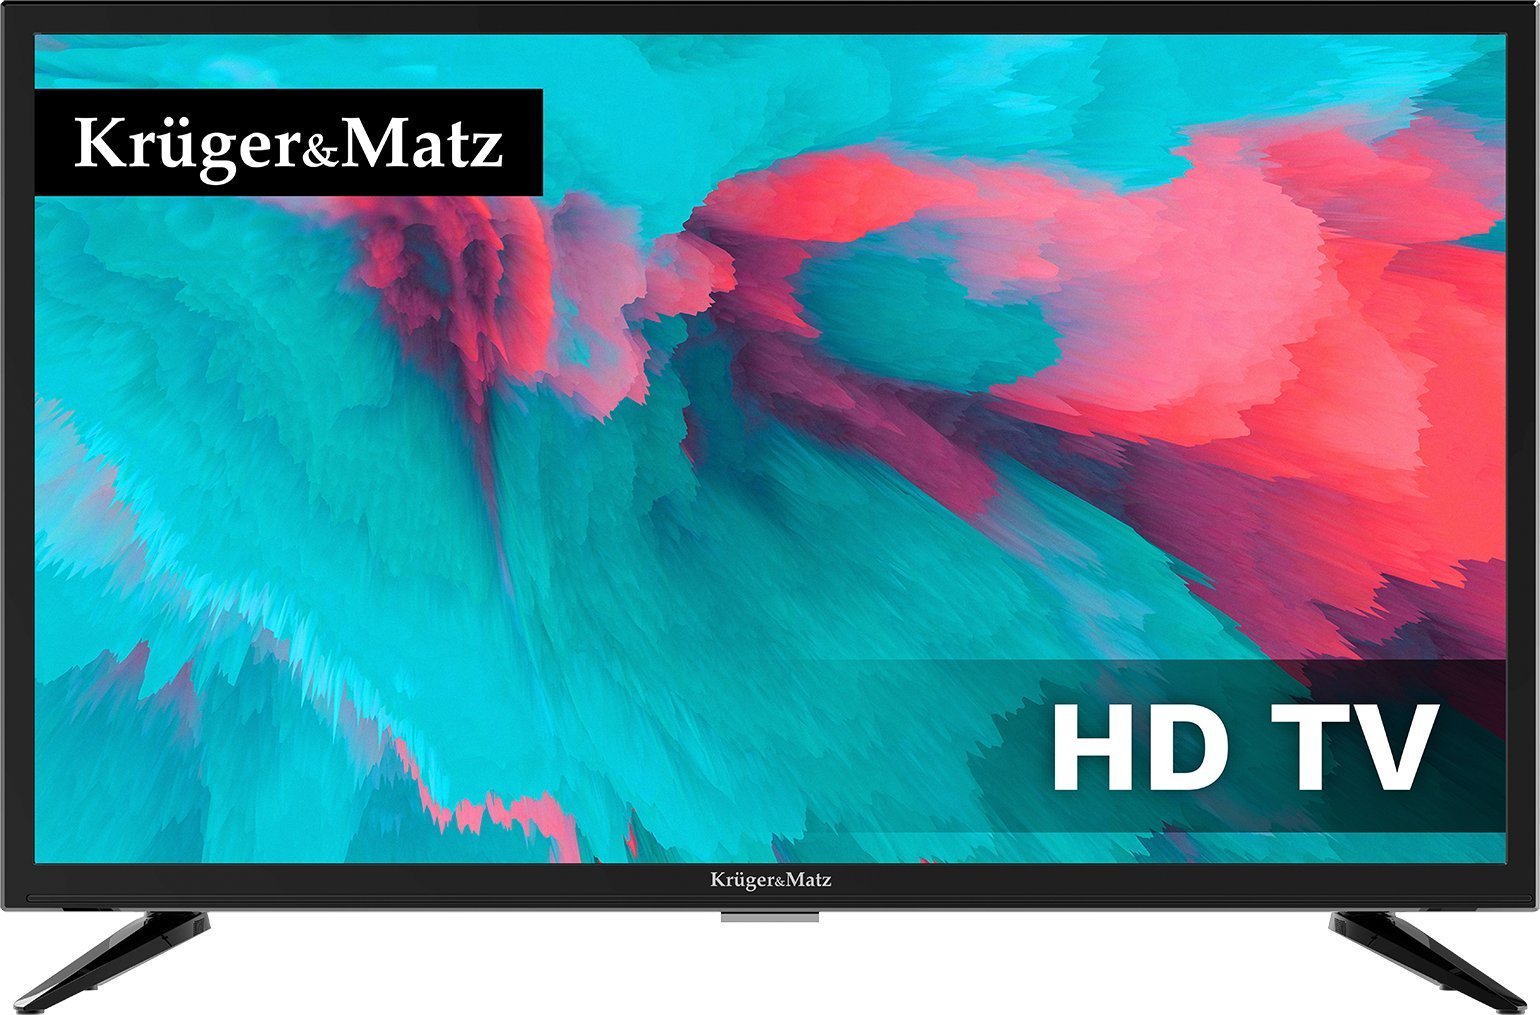 Telewizor Kruger&Matz Telewizor 24 cale HD DVB-T2 H.265 HEVC